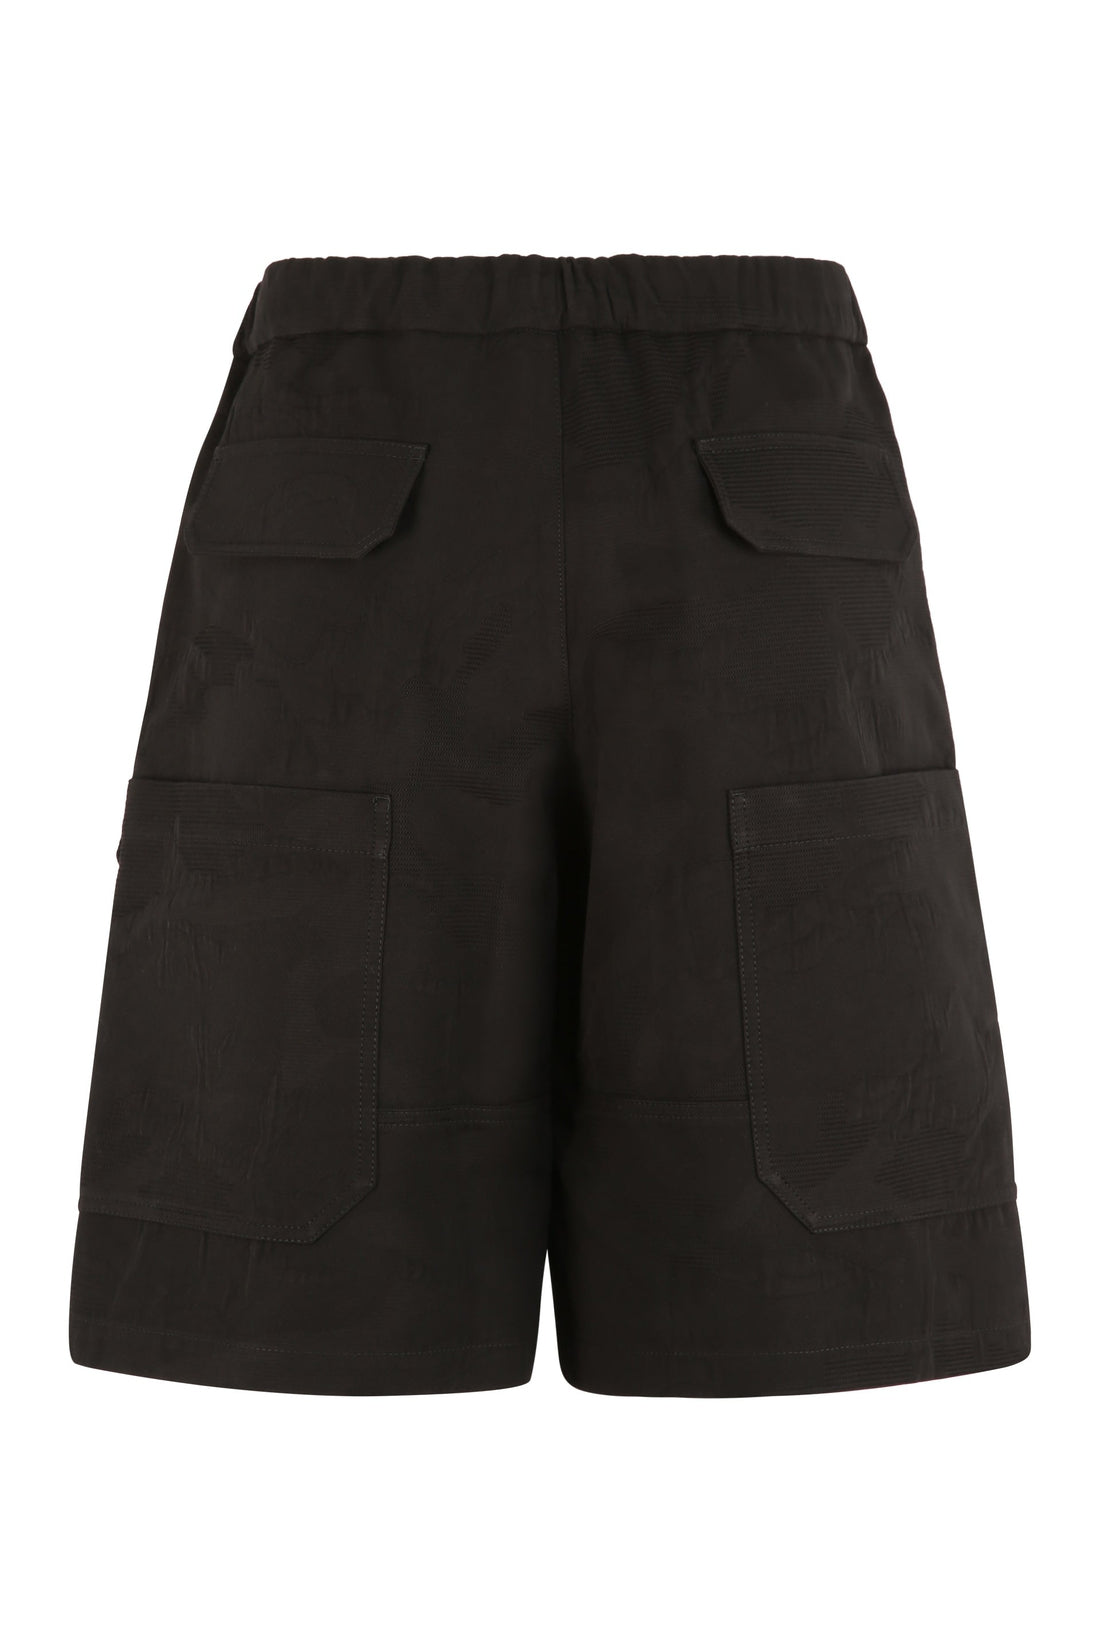 Valentino-OUTLET-SALE-Cotton cargo bermuda shorts-ARCHIVIST